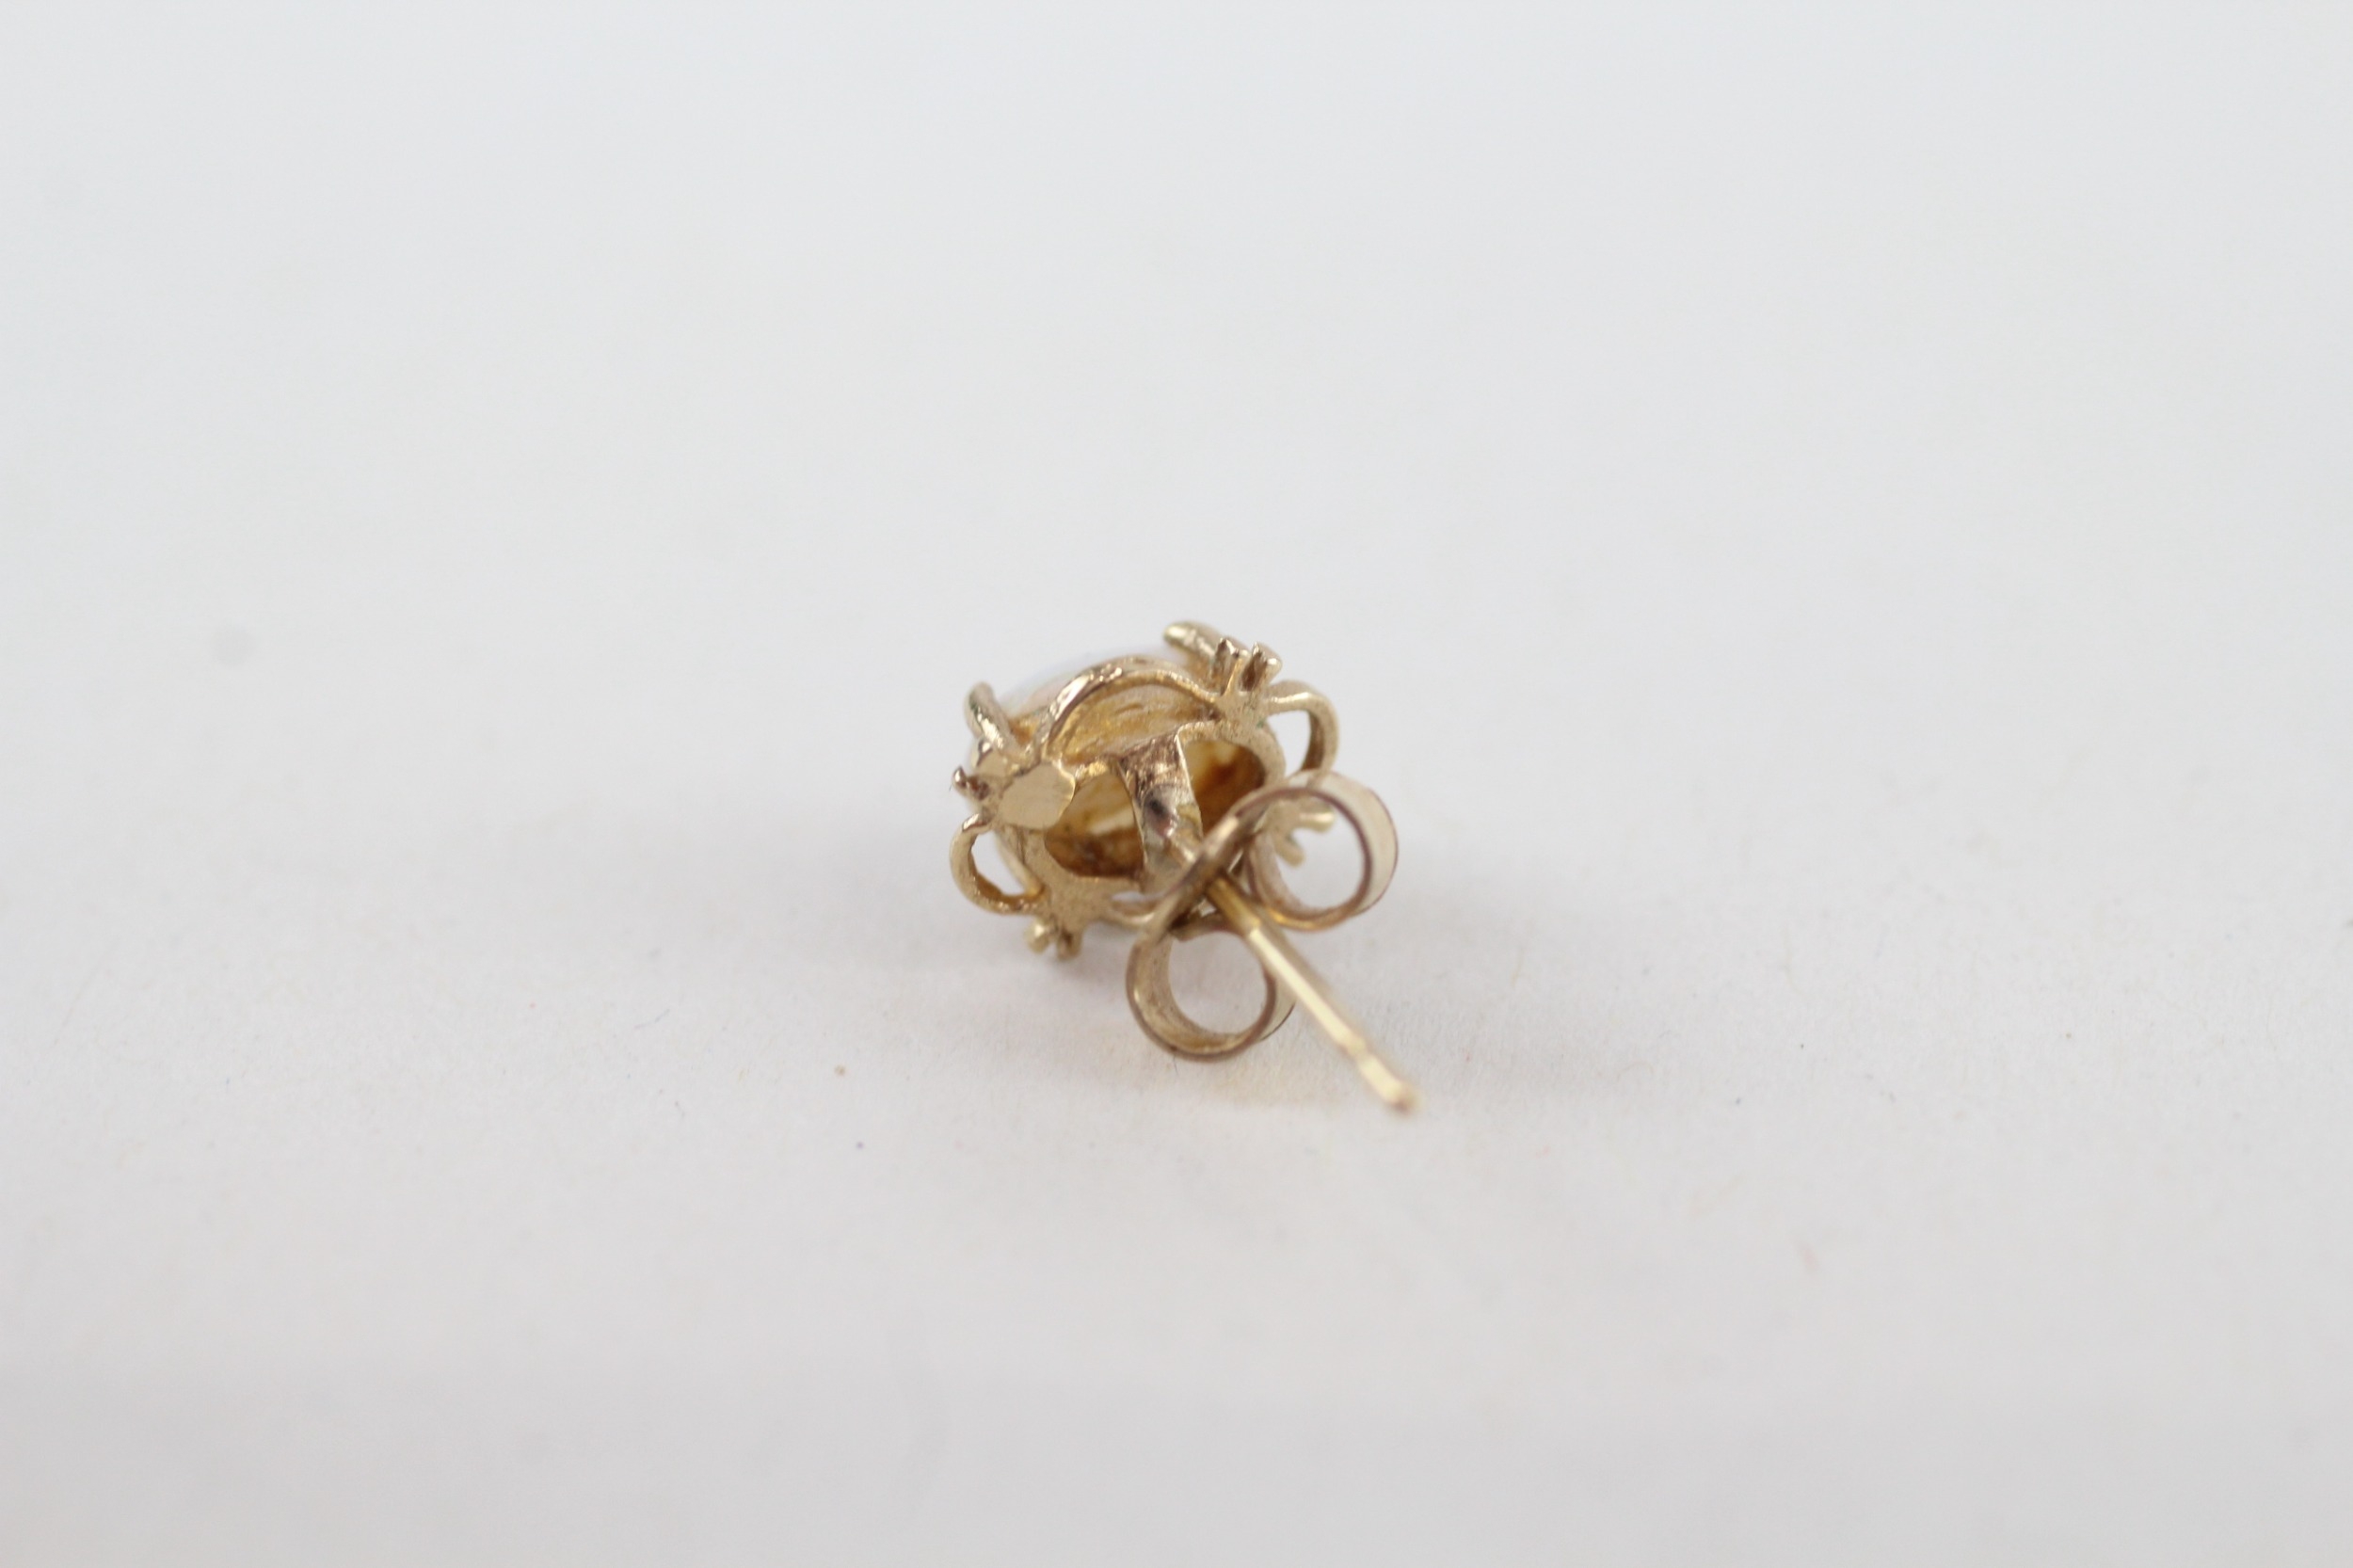 9ct gold white gemstone stud earrings (0.8g) - Image 4 of 4